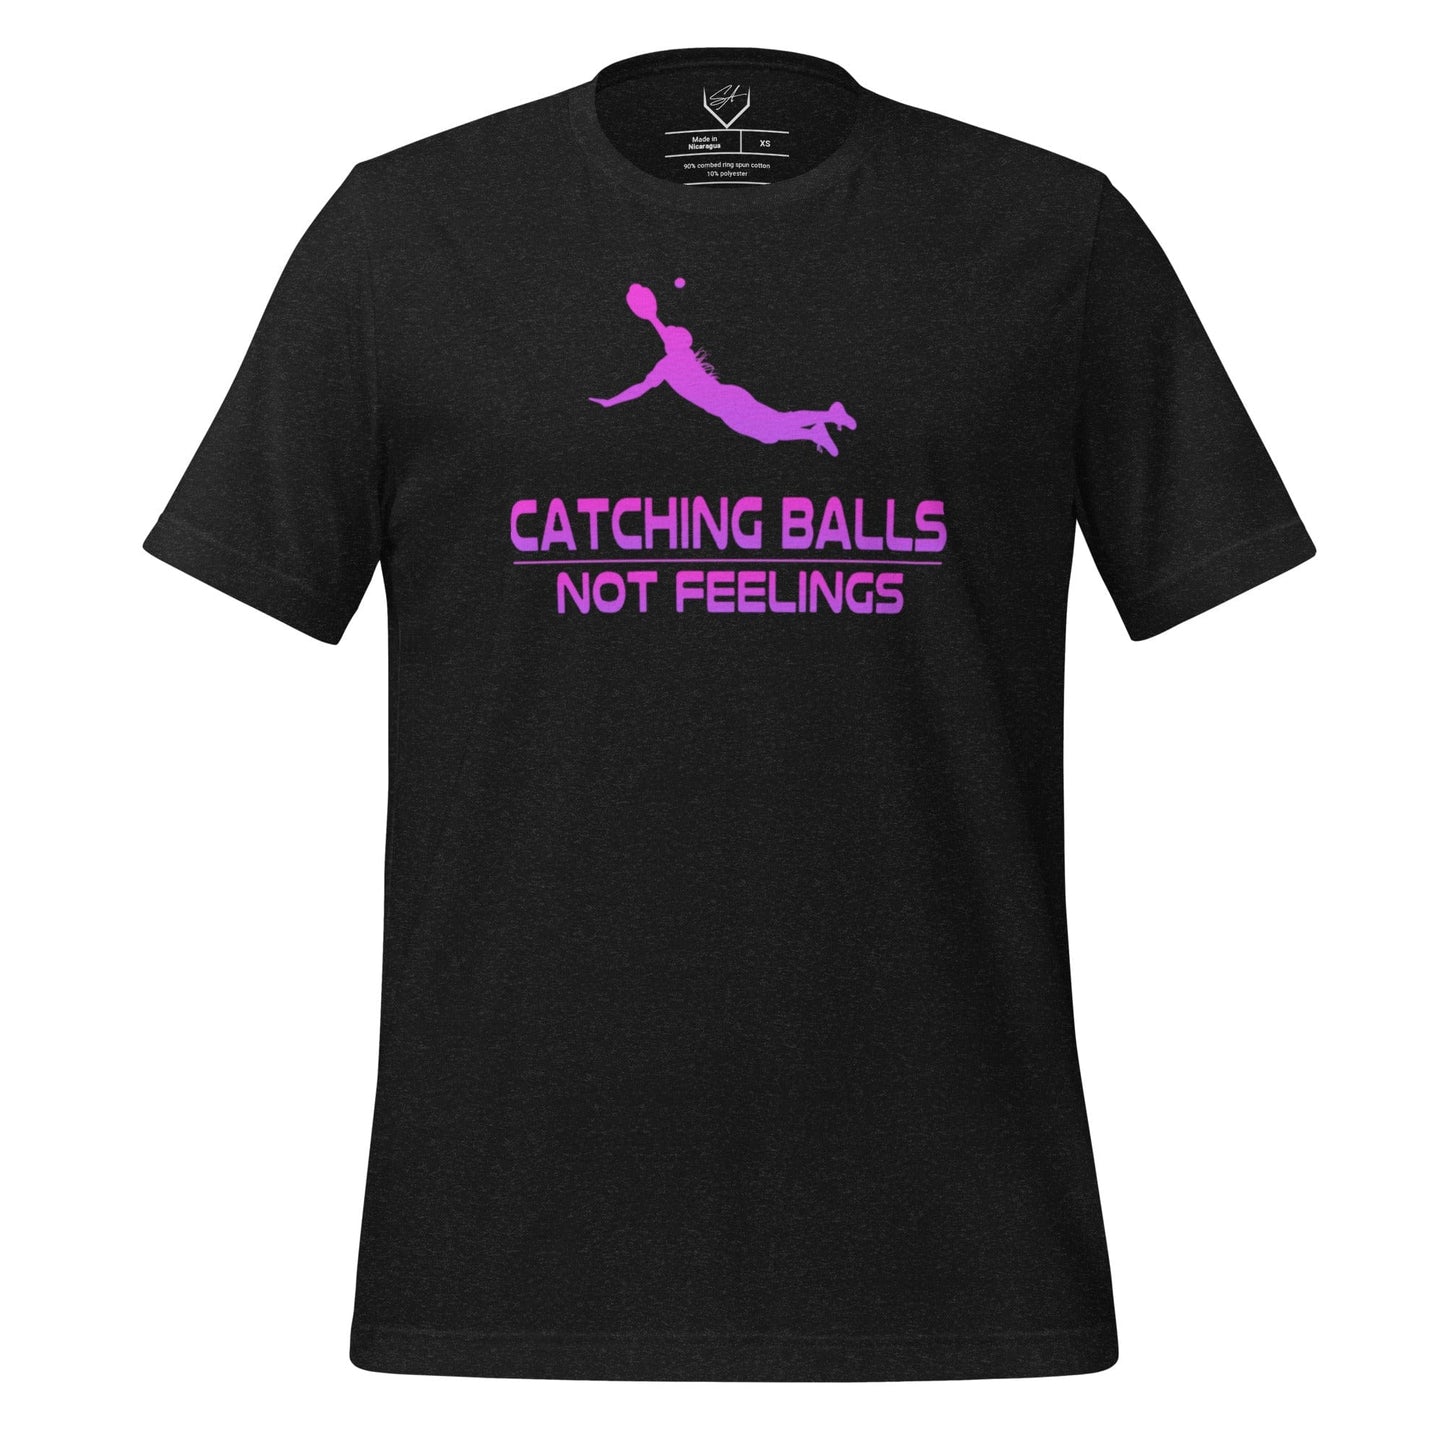 Catching Balls Not Feelings - Adult Tee